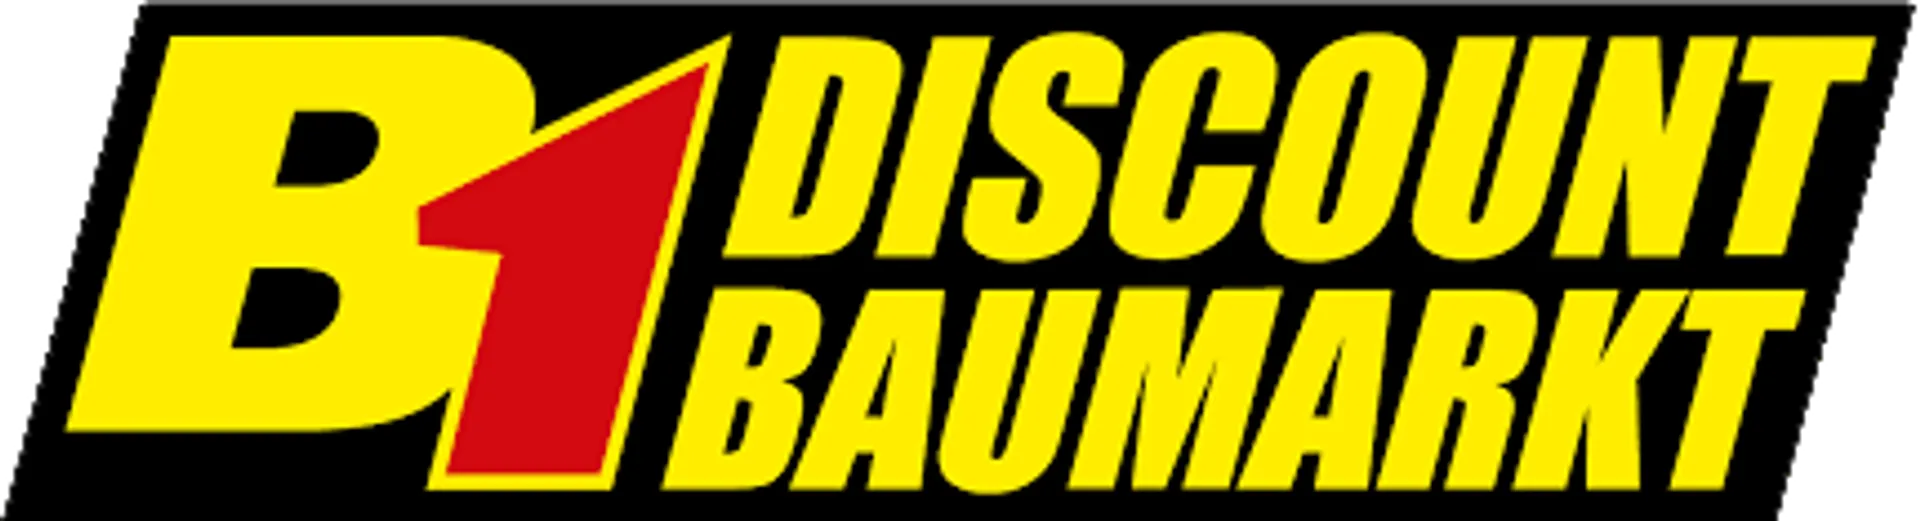 B1 DISCOUNT BAUMARKT logo die aktuell Flugblatt